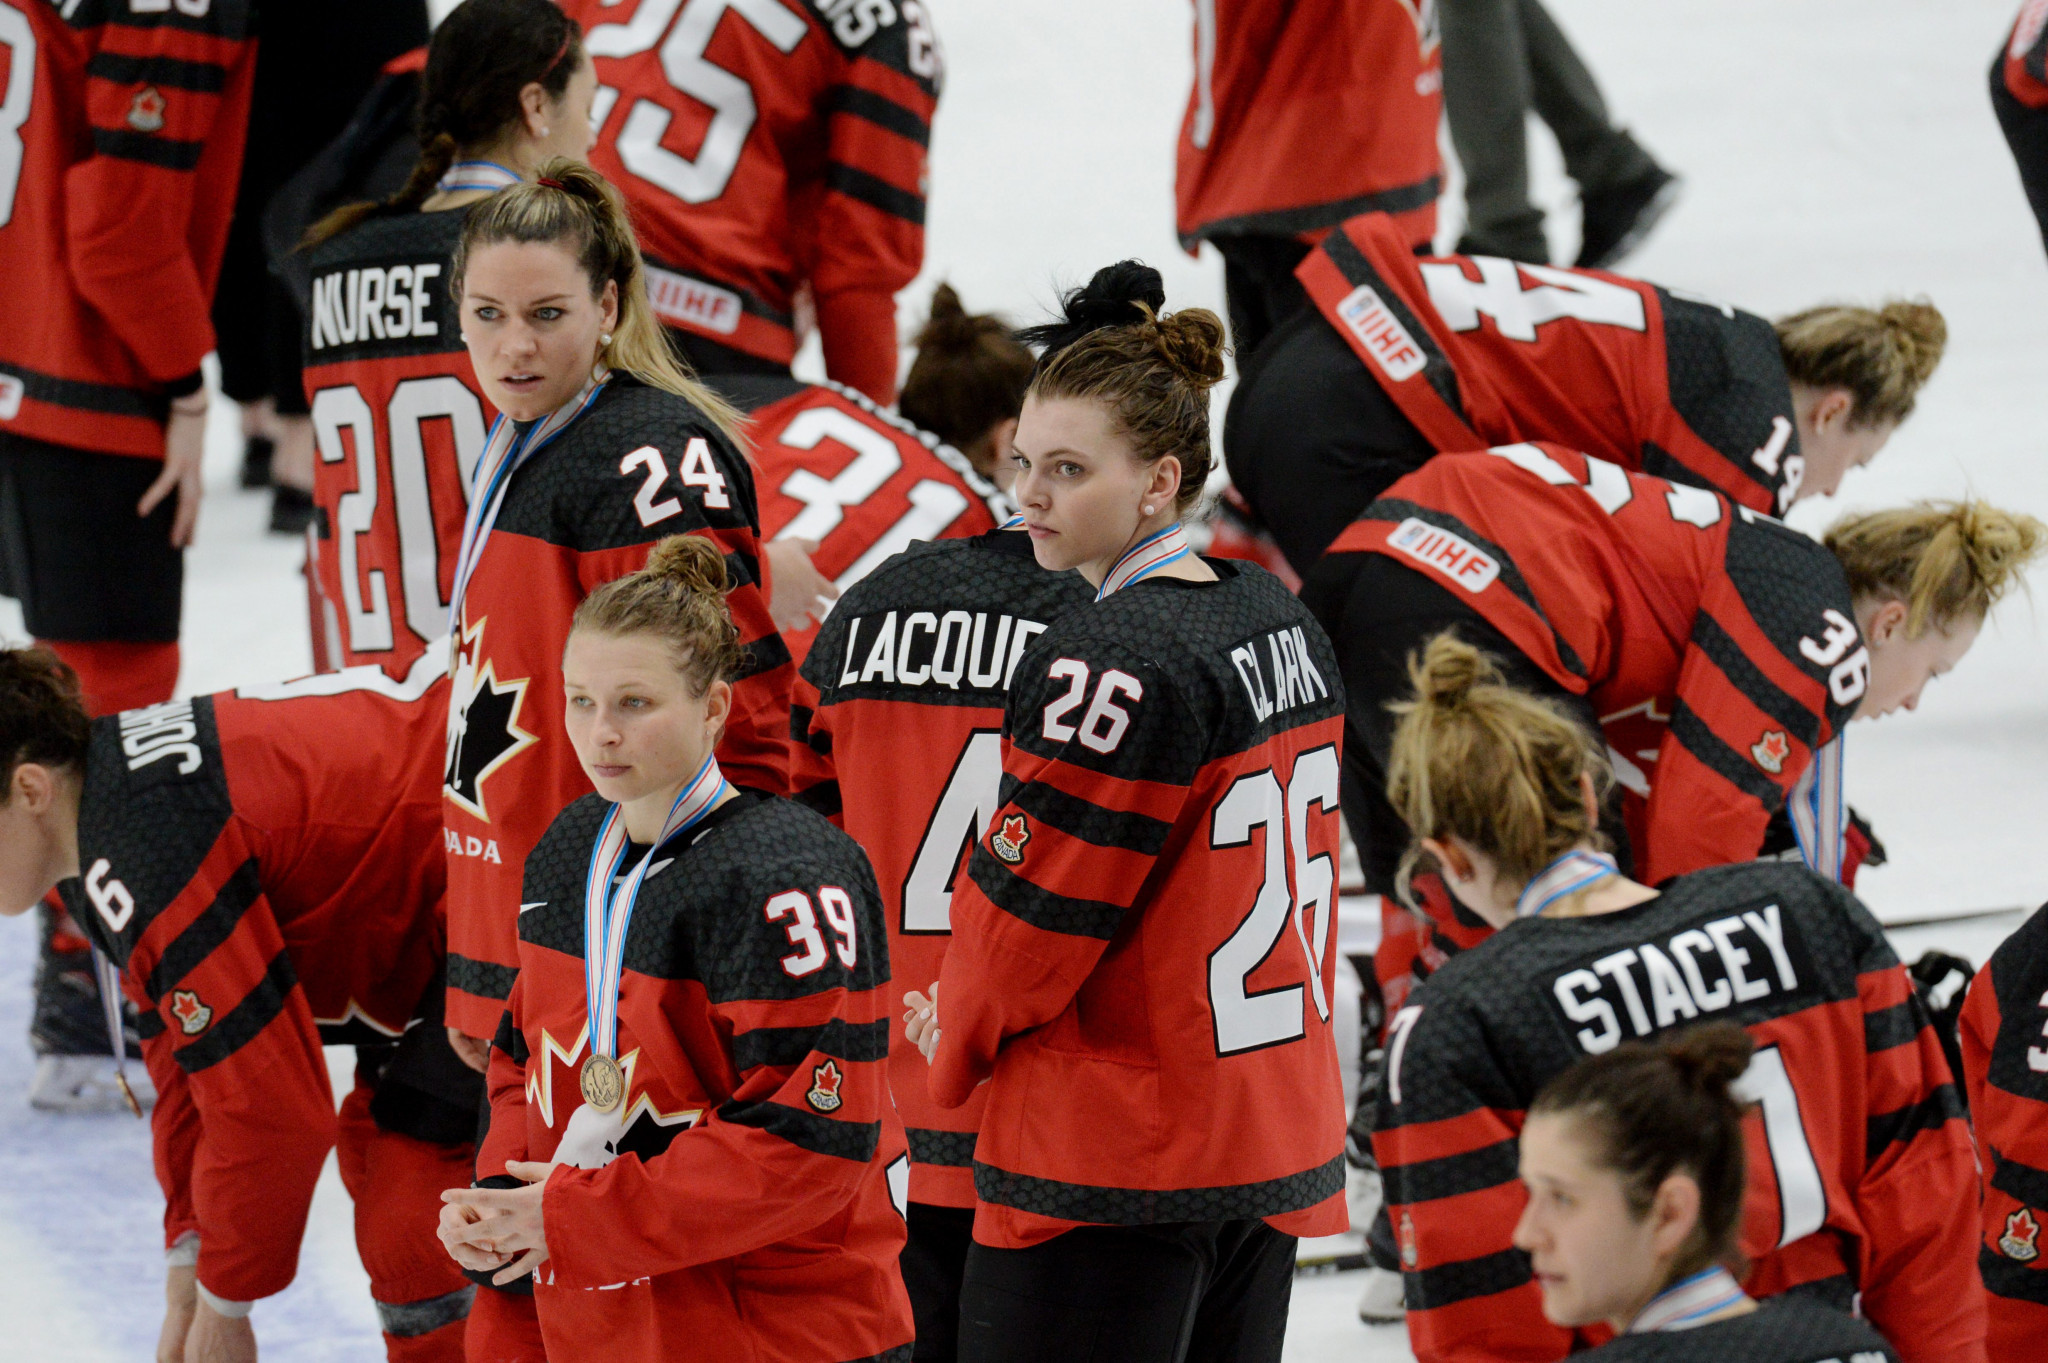 Ten teams arrive in Calgary for IIHF Ice Hockey Women's World Championship